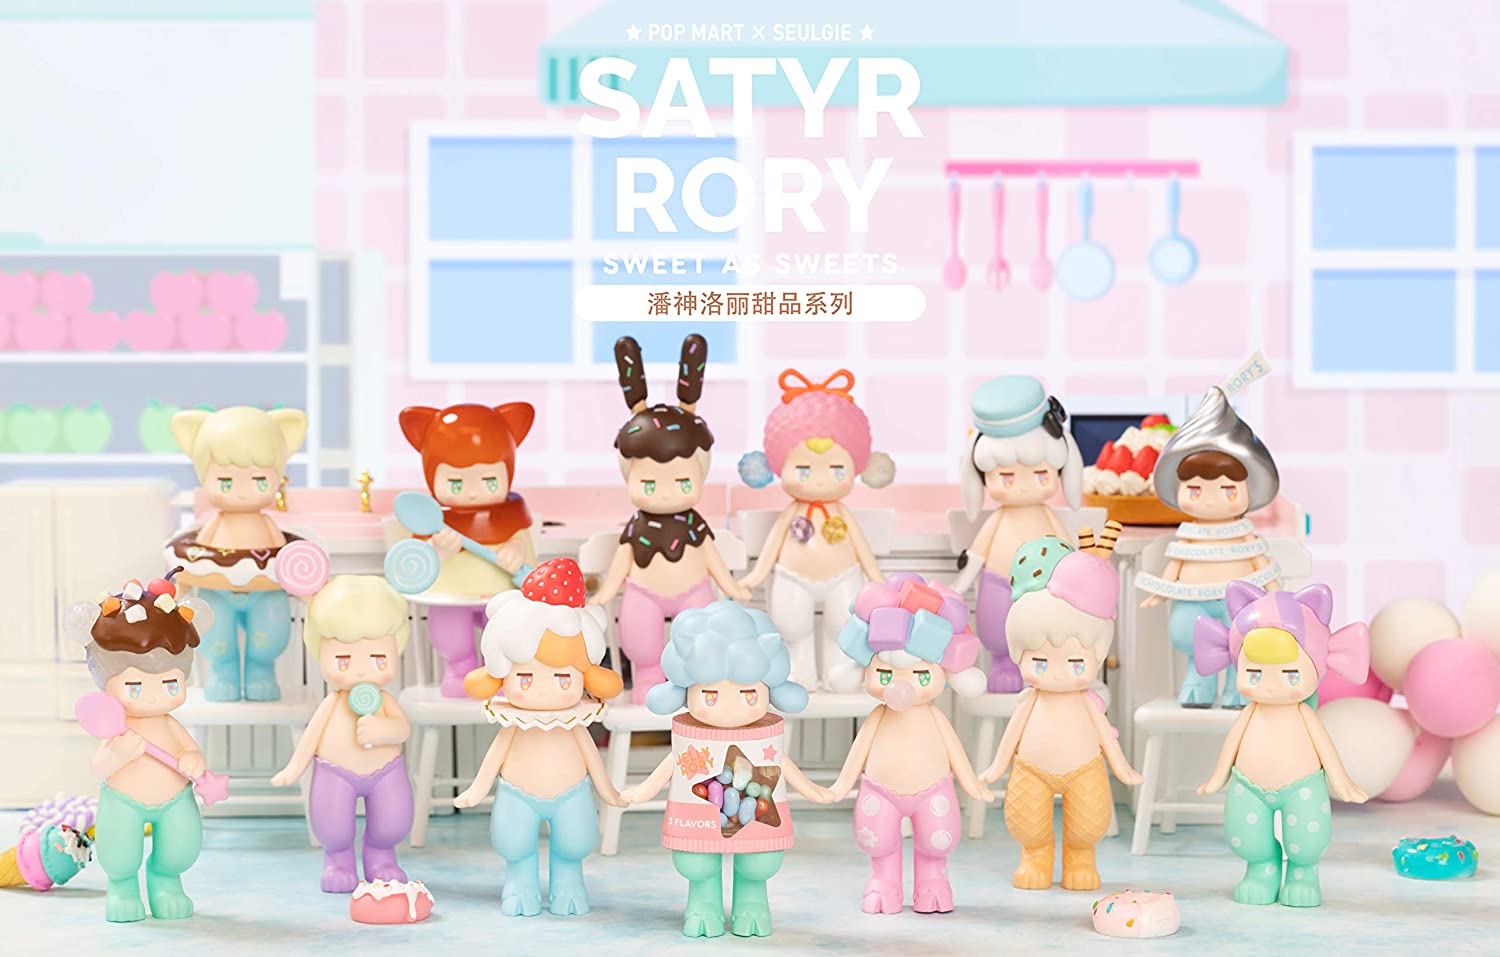 Pop Mart x Seulgie Satyr Rory Sweet as Sweets Lifestyle Pop Mart   